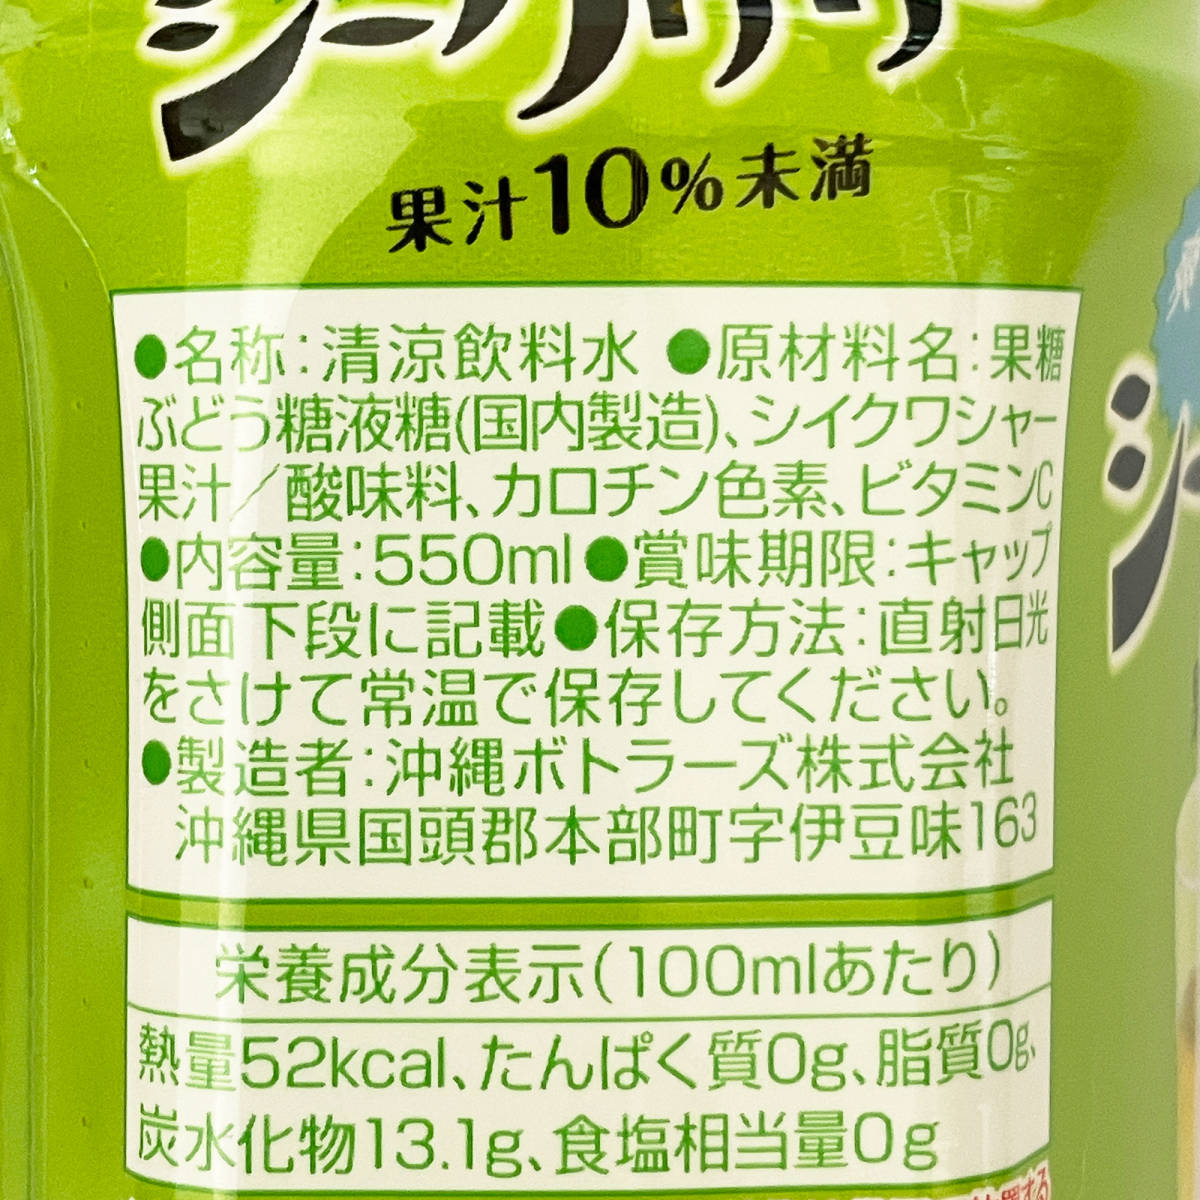  Okinawa ограничение UCCsi-k.sa-550ml 24шт.@1 кейс si-k.-sa-. данный земля напиток . земля производство ваш заказ 